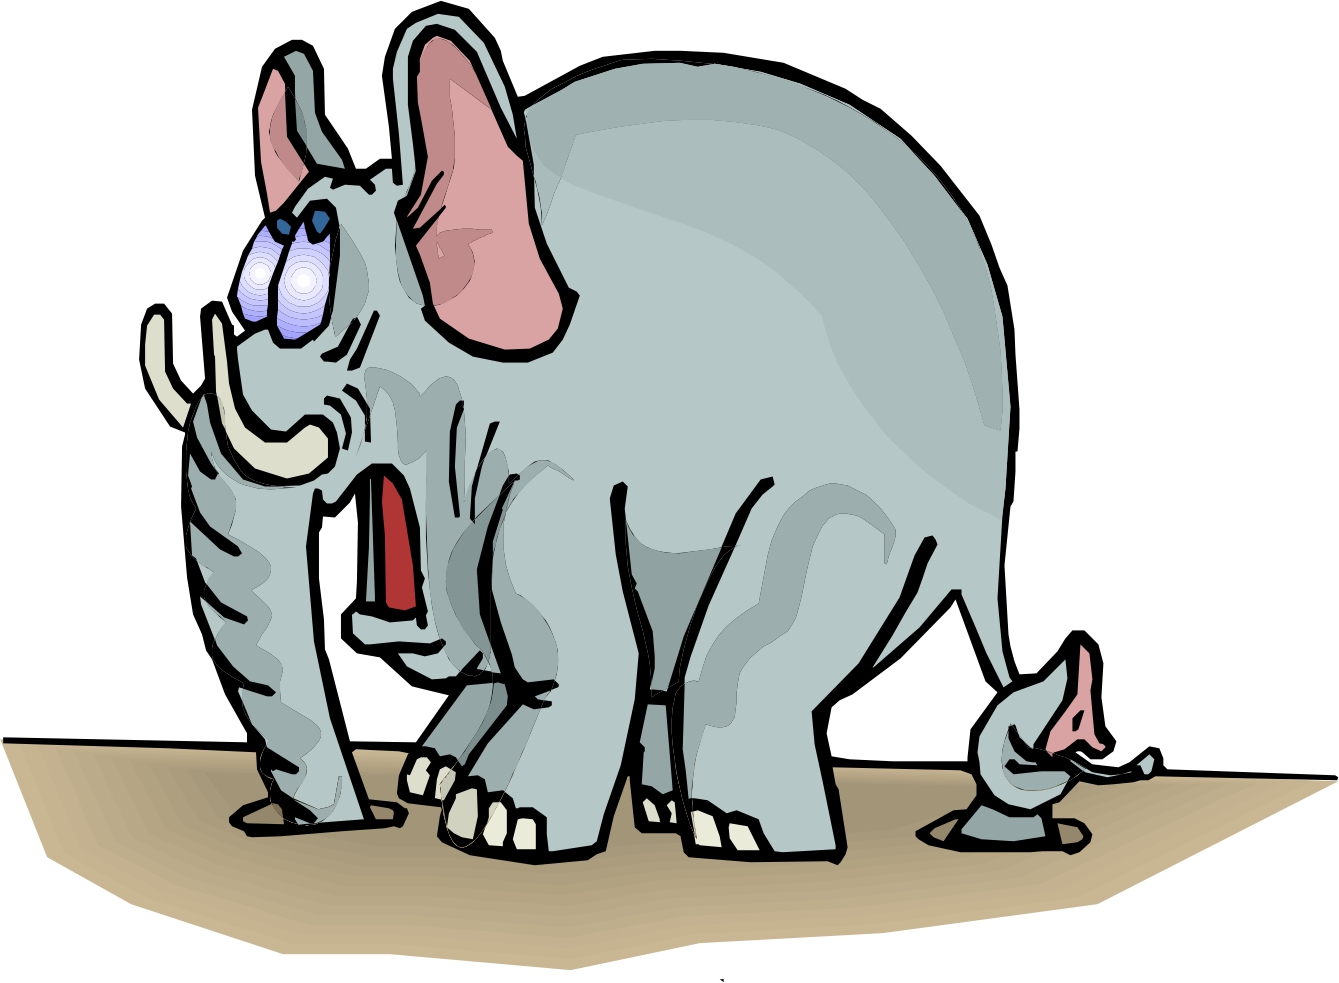 Cartoon Elephant Images - ClipArt Best